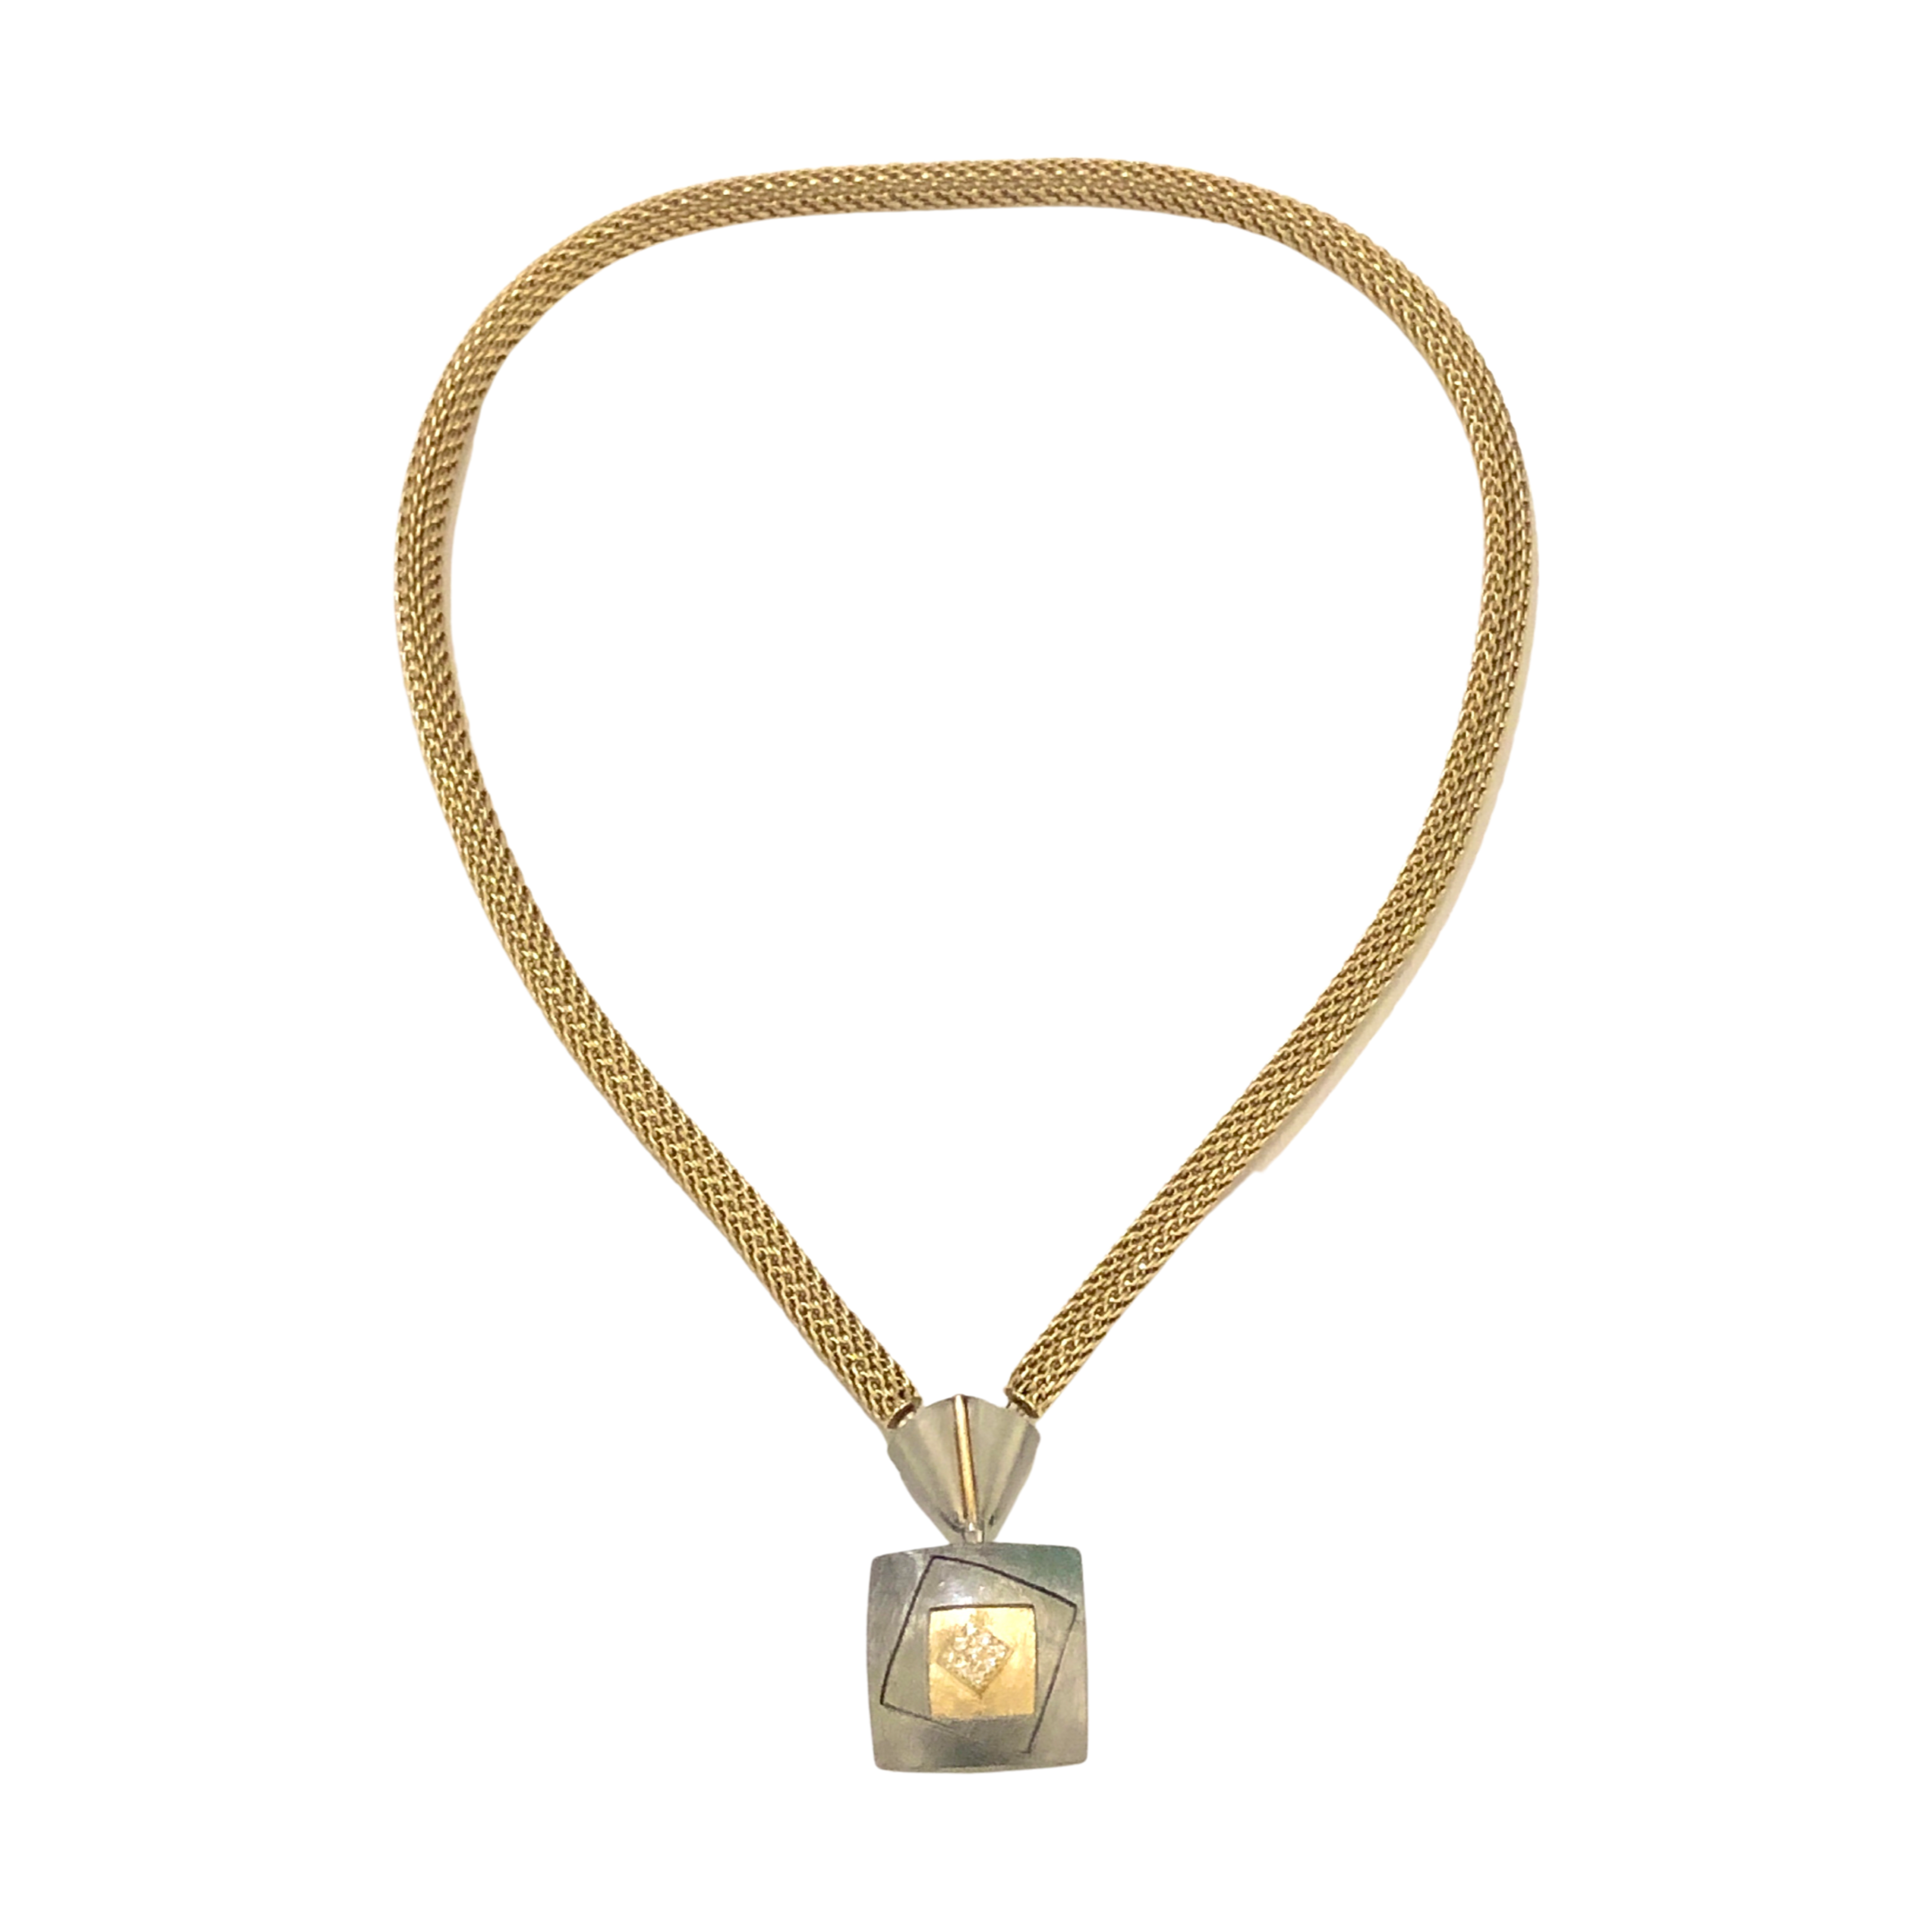 Pendant Necklace Cylinder shape gemstone. 18 inch black rope necklace